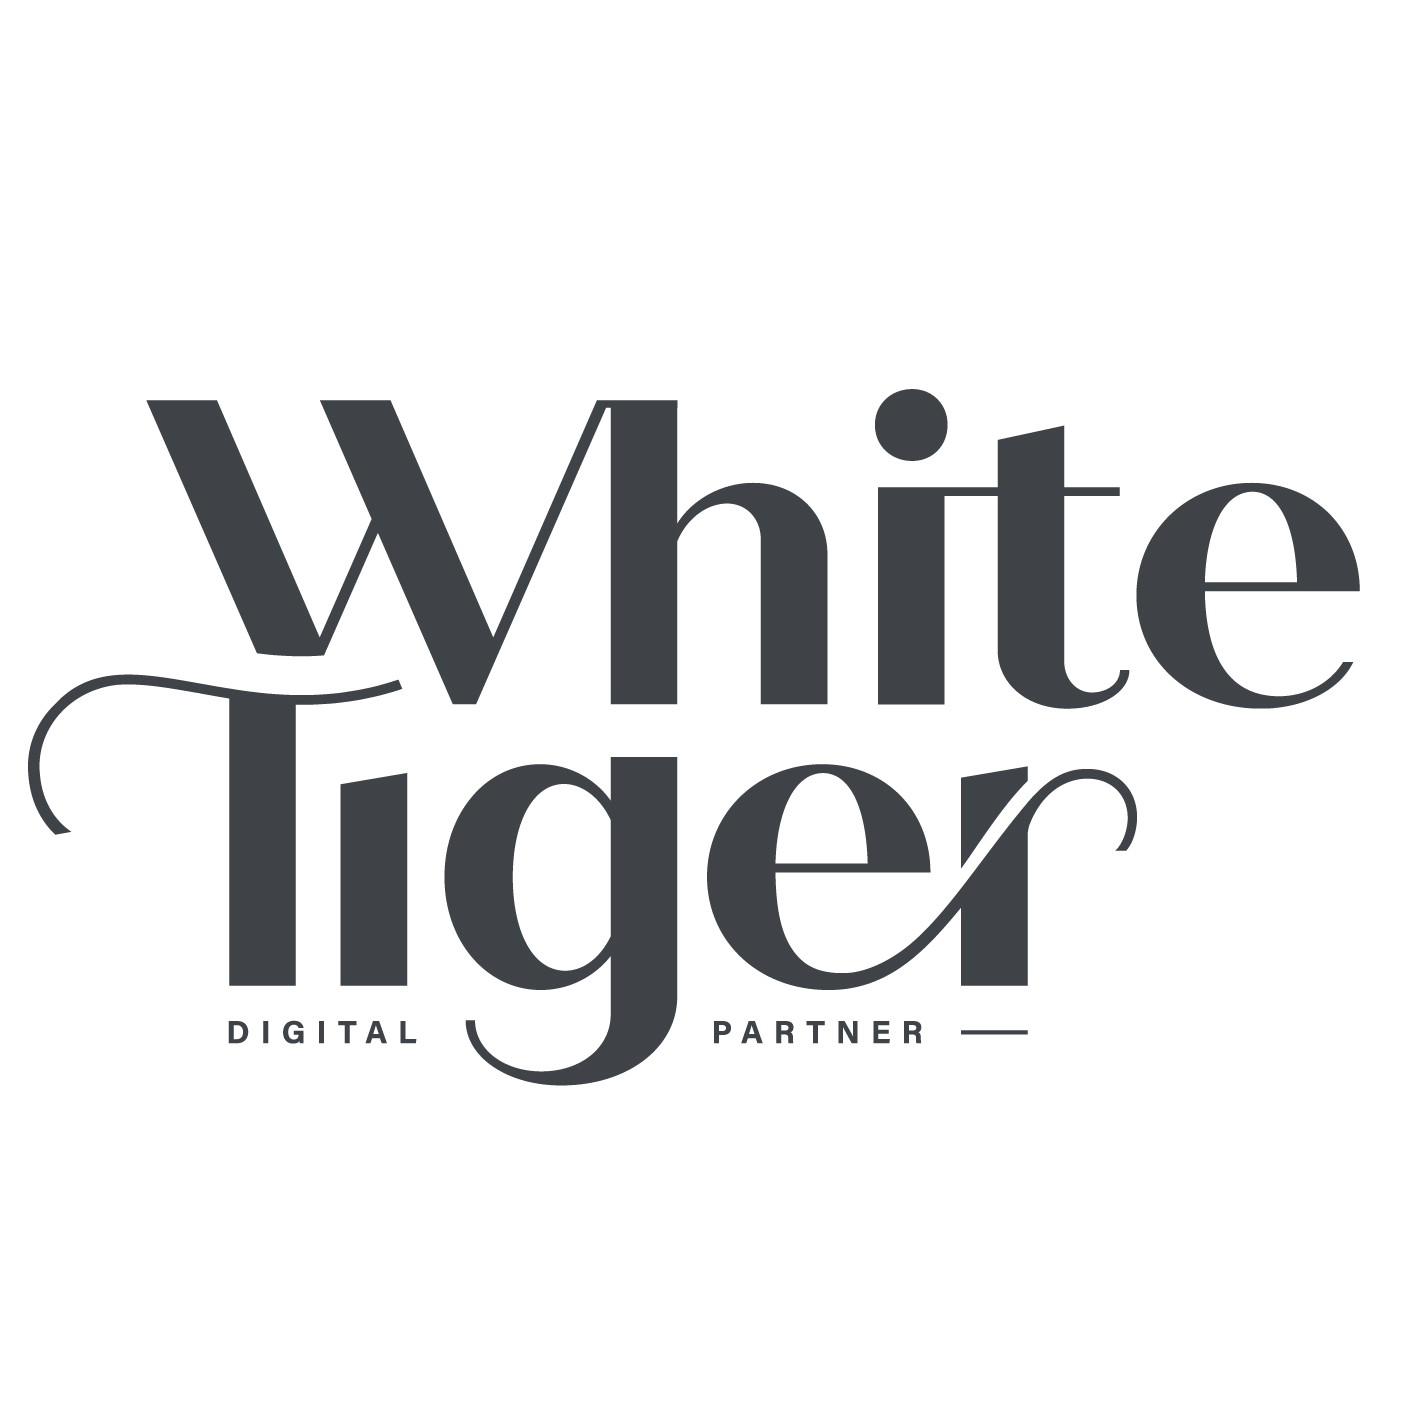 White Tiger | Digital Partner